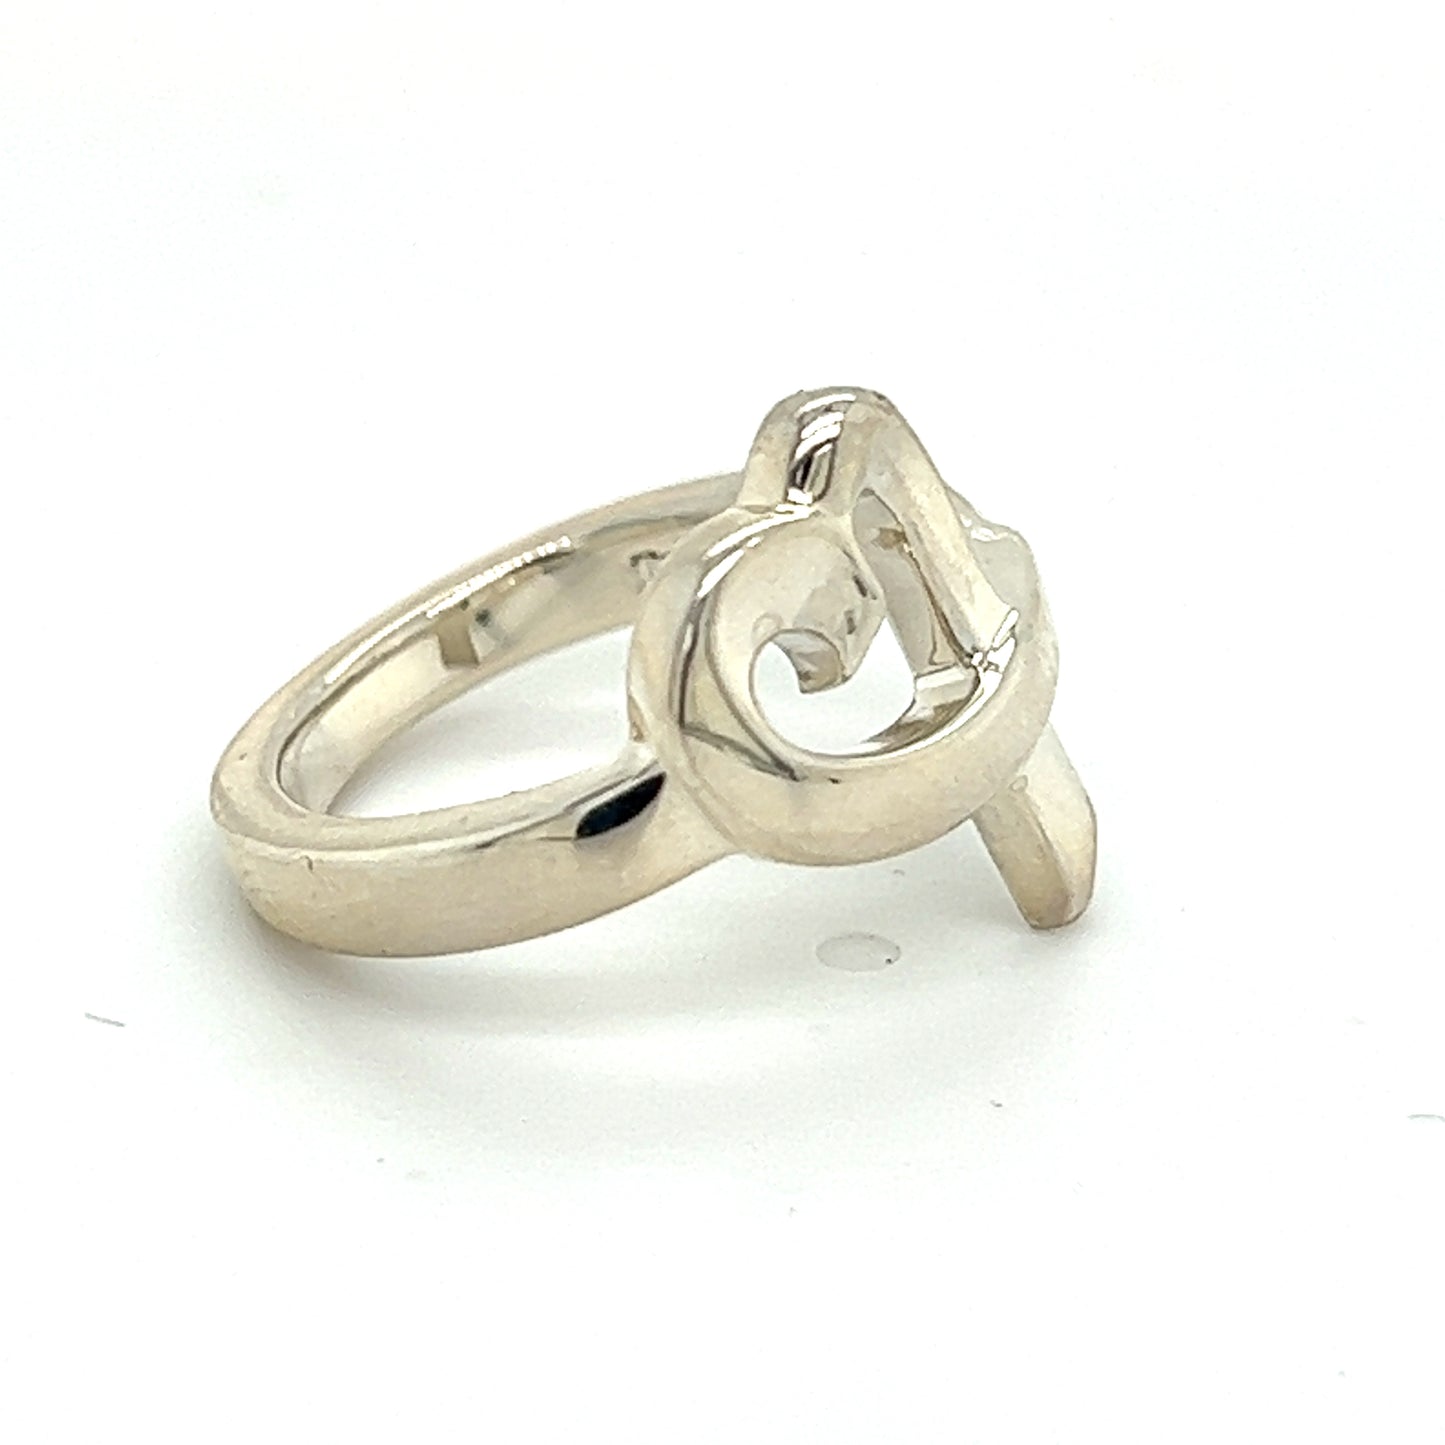 Tiffany & Co Estate Heart Ring Size 6 Sterling Silver TIF498 - Certified Fine Jewelry